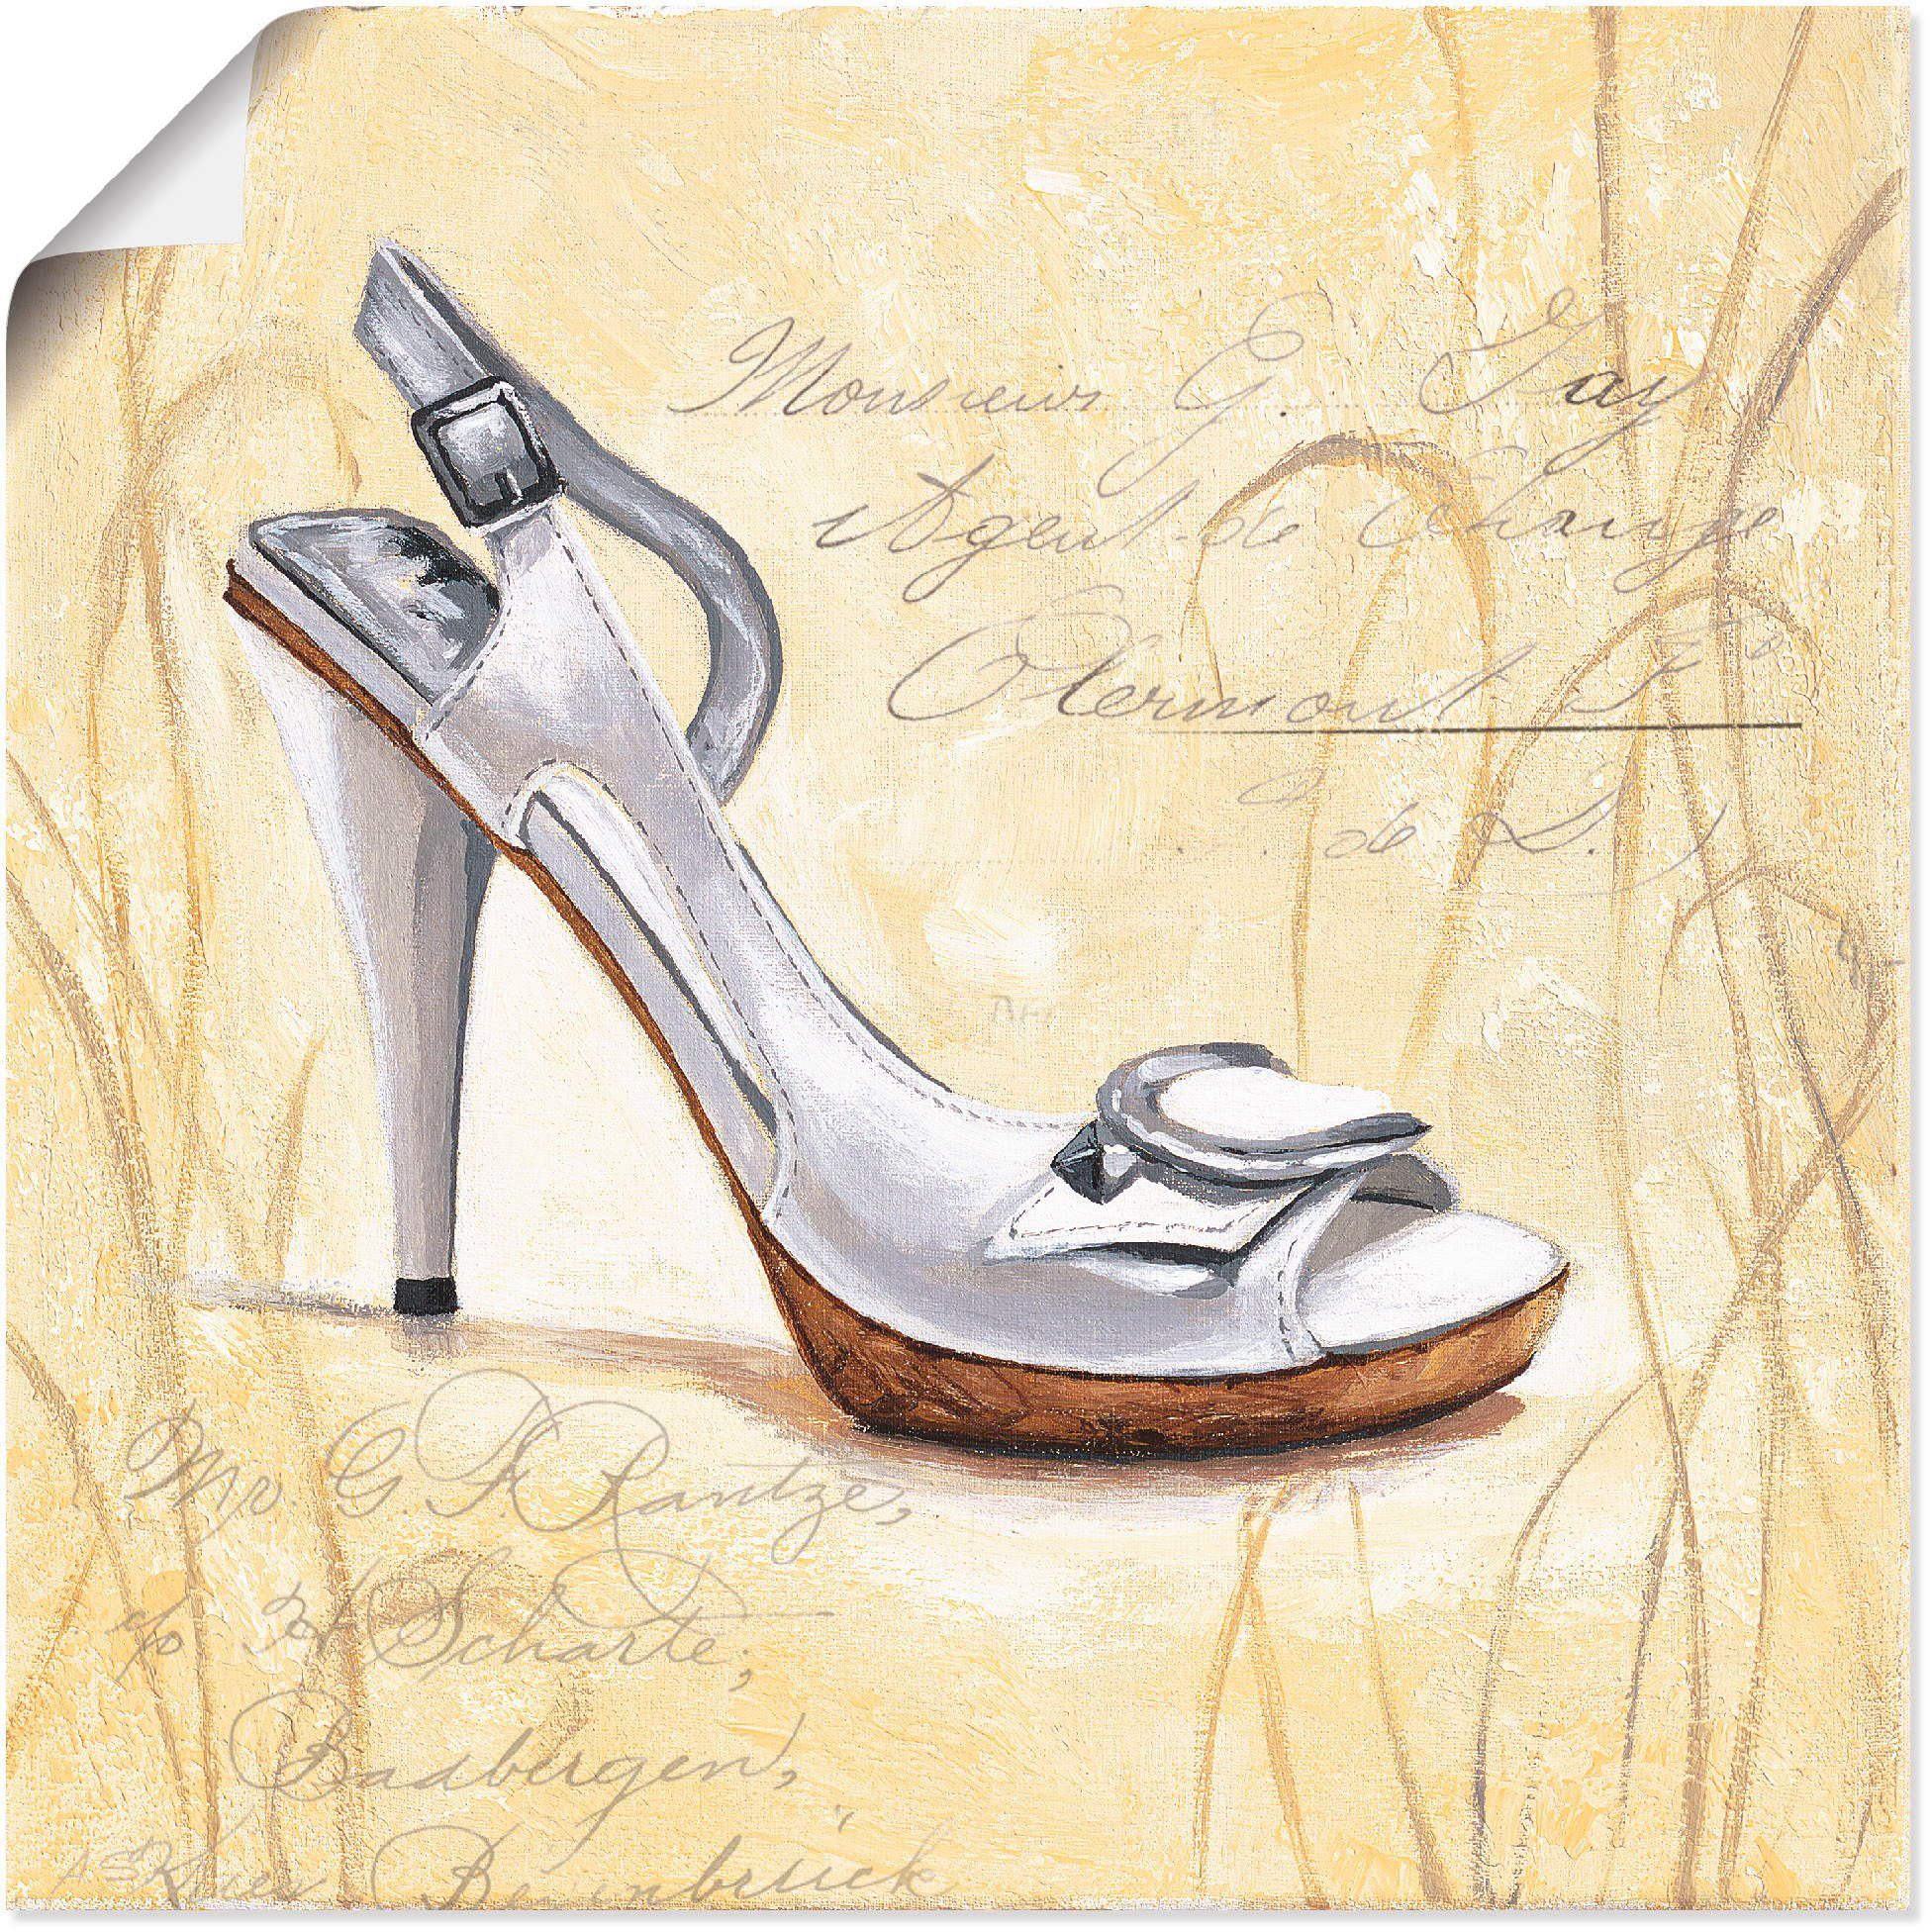 Artland Artprint Stiletto's IV - schoenen in vele afmetingen & productsoorten - artprint van aluminium / artprint voor buiten, artprint op linnen, poster, muursticker / wandfolie o